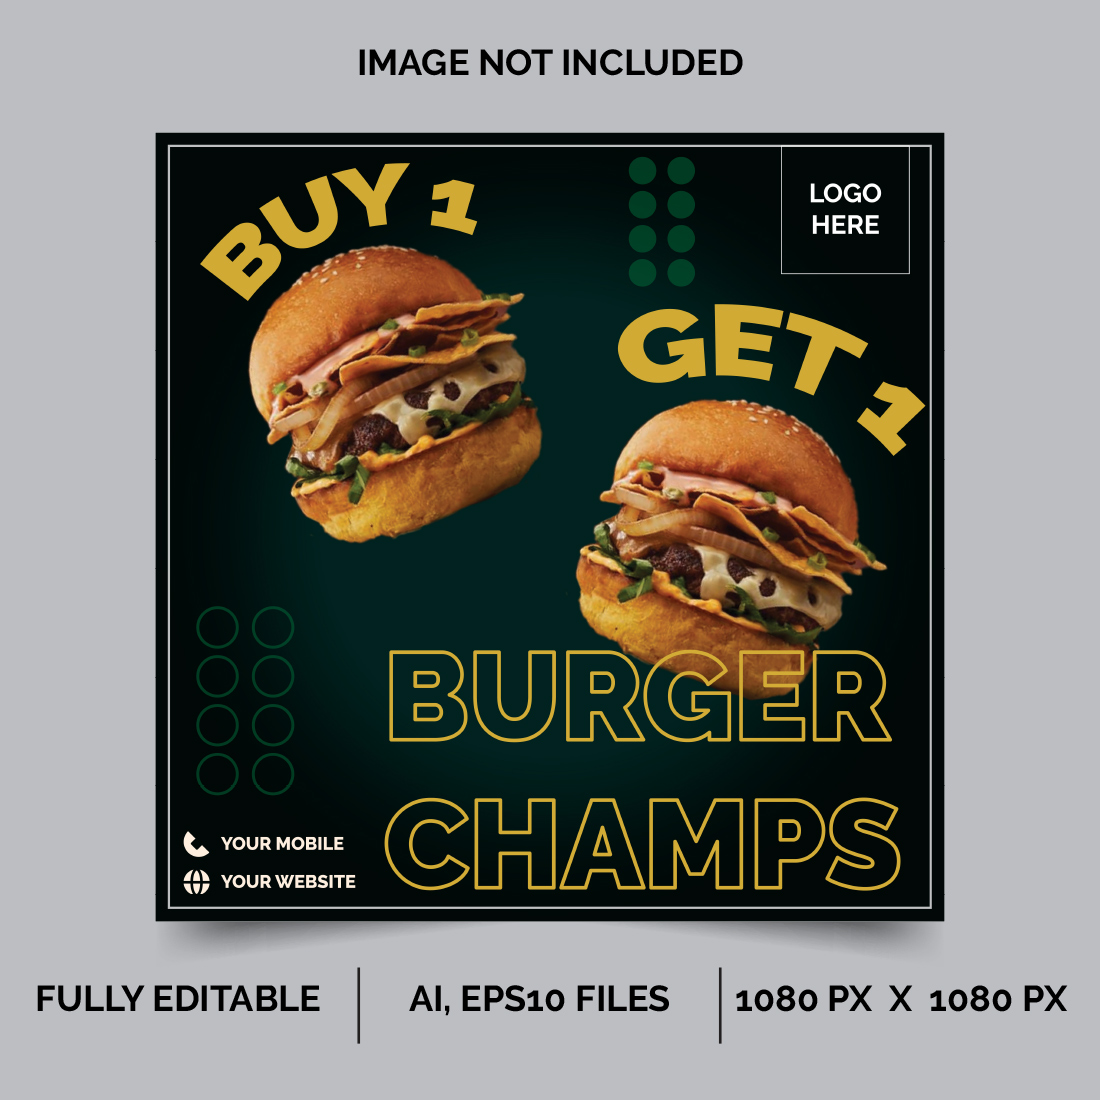 Burger and food menu social media banner templates preview image.